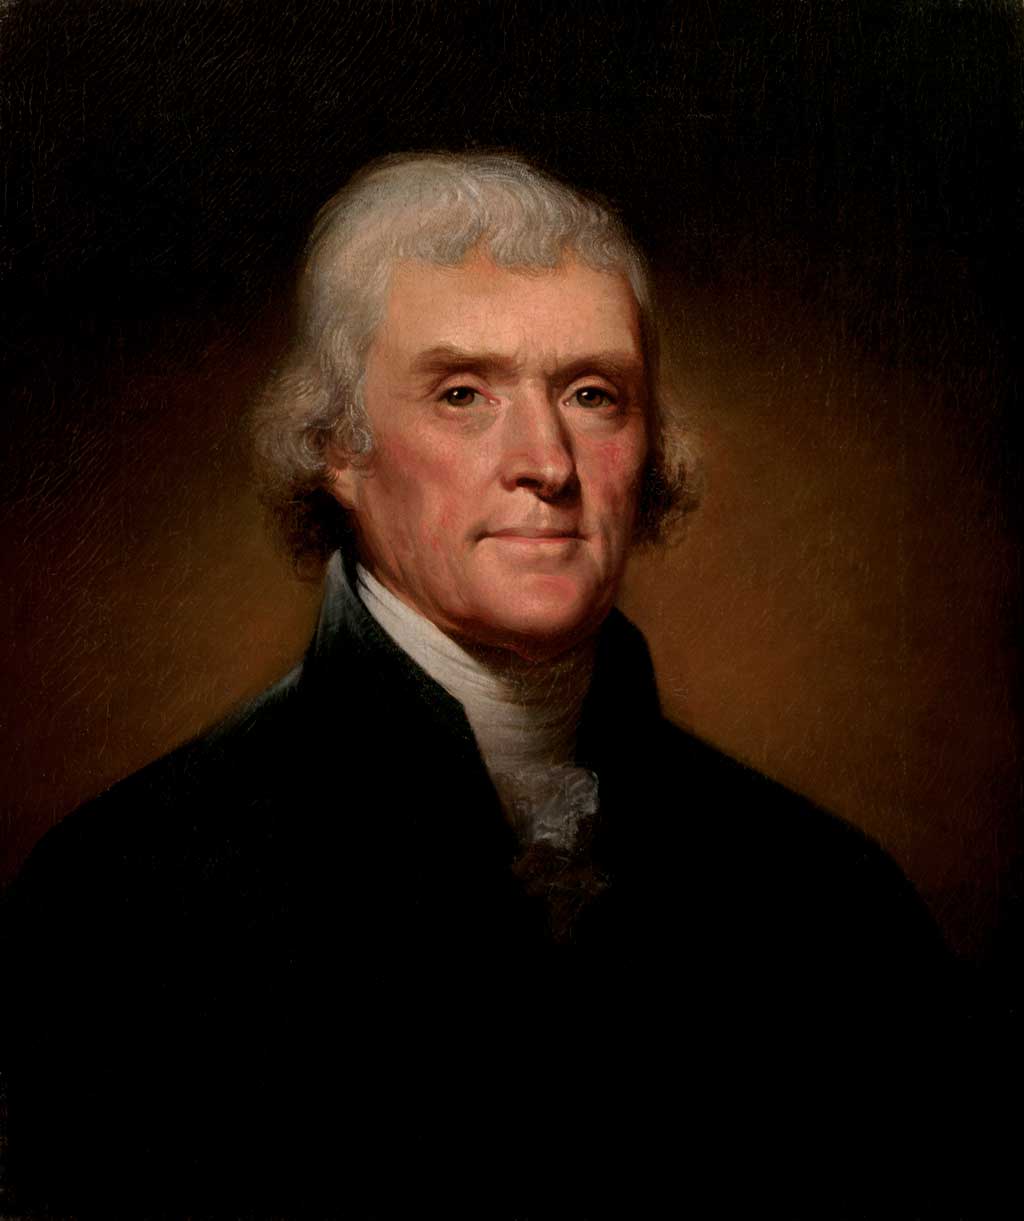 Official Presidential portrait of Thomas Jefferson